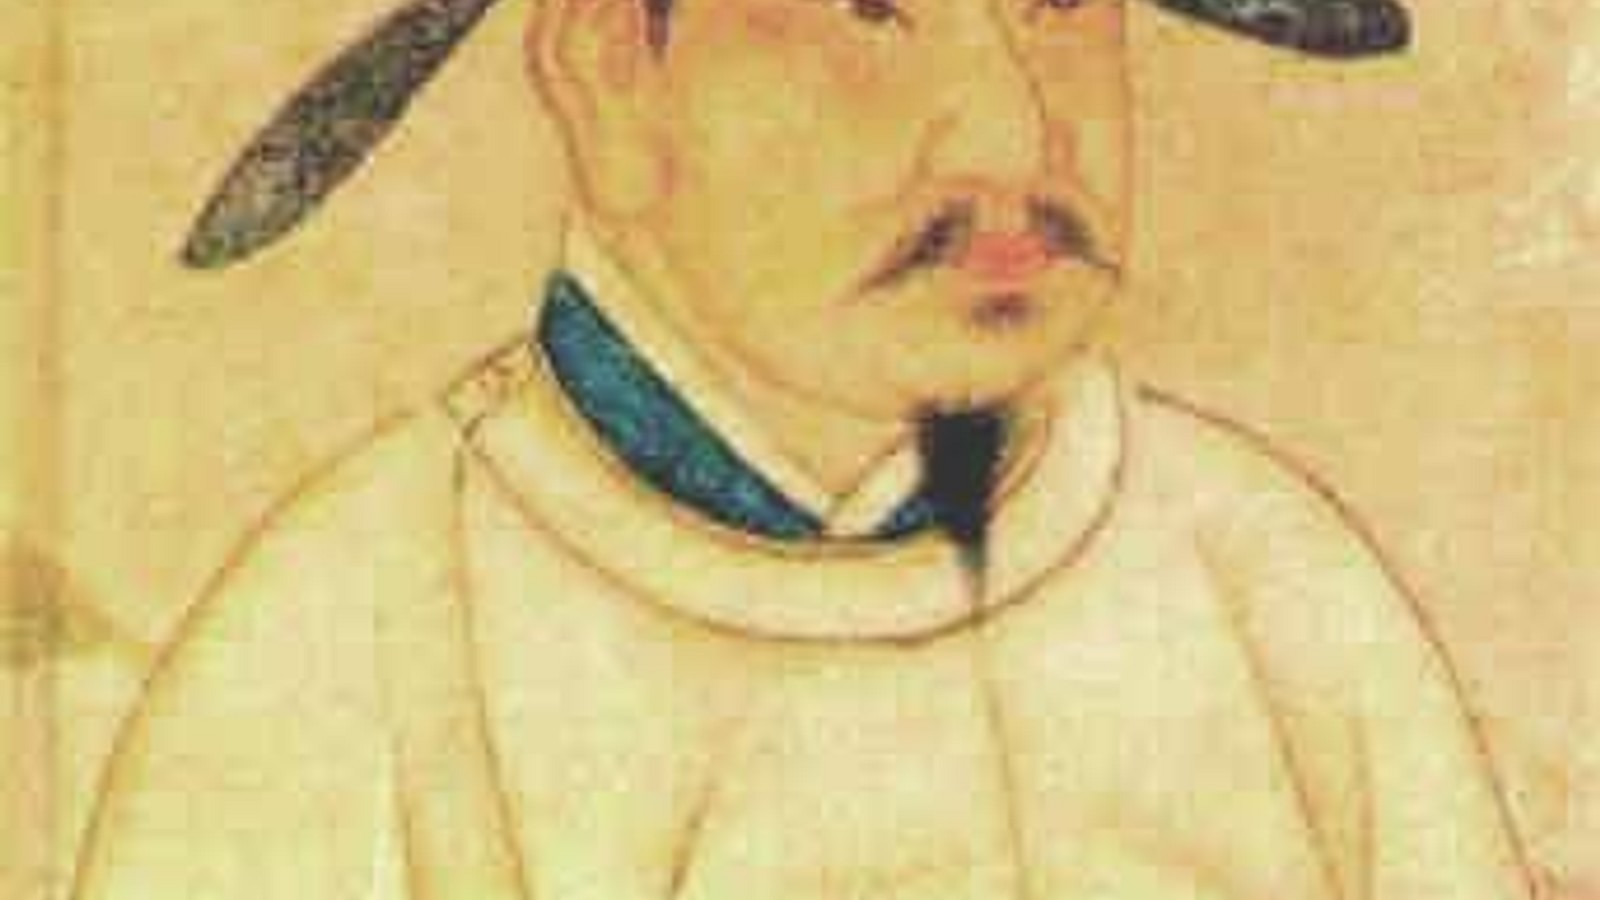 tang dynasty emperor